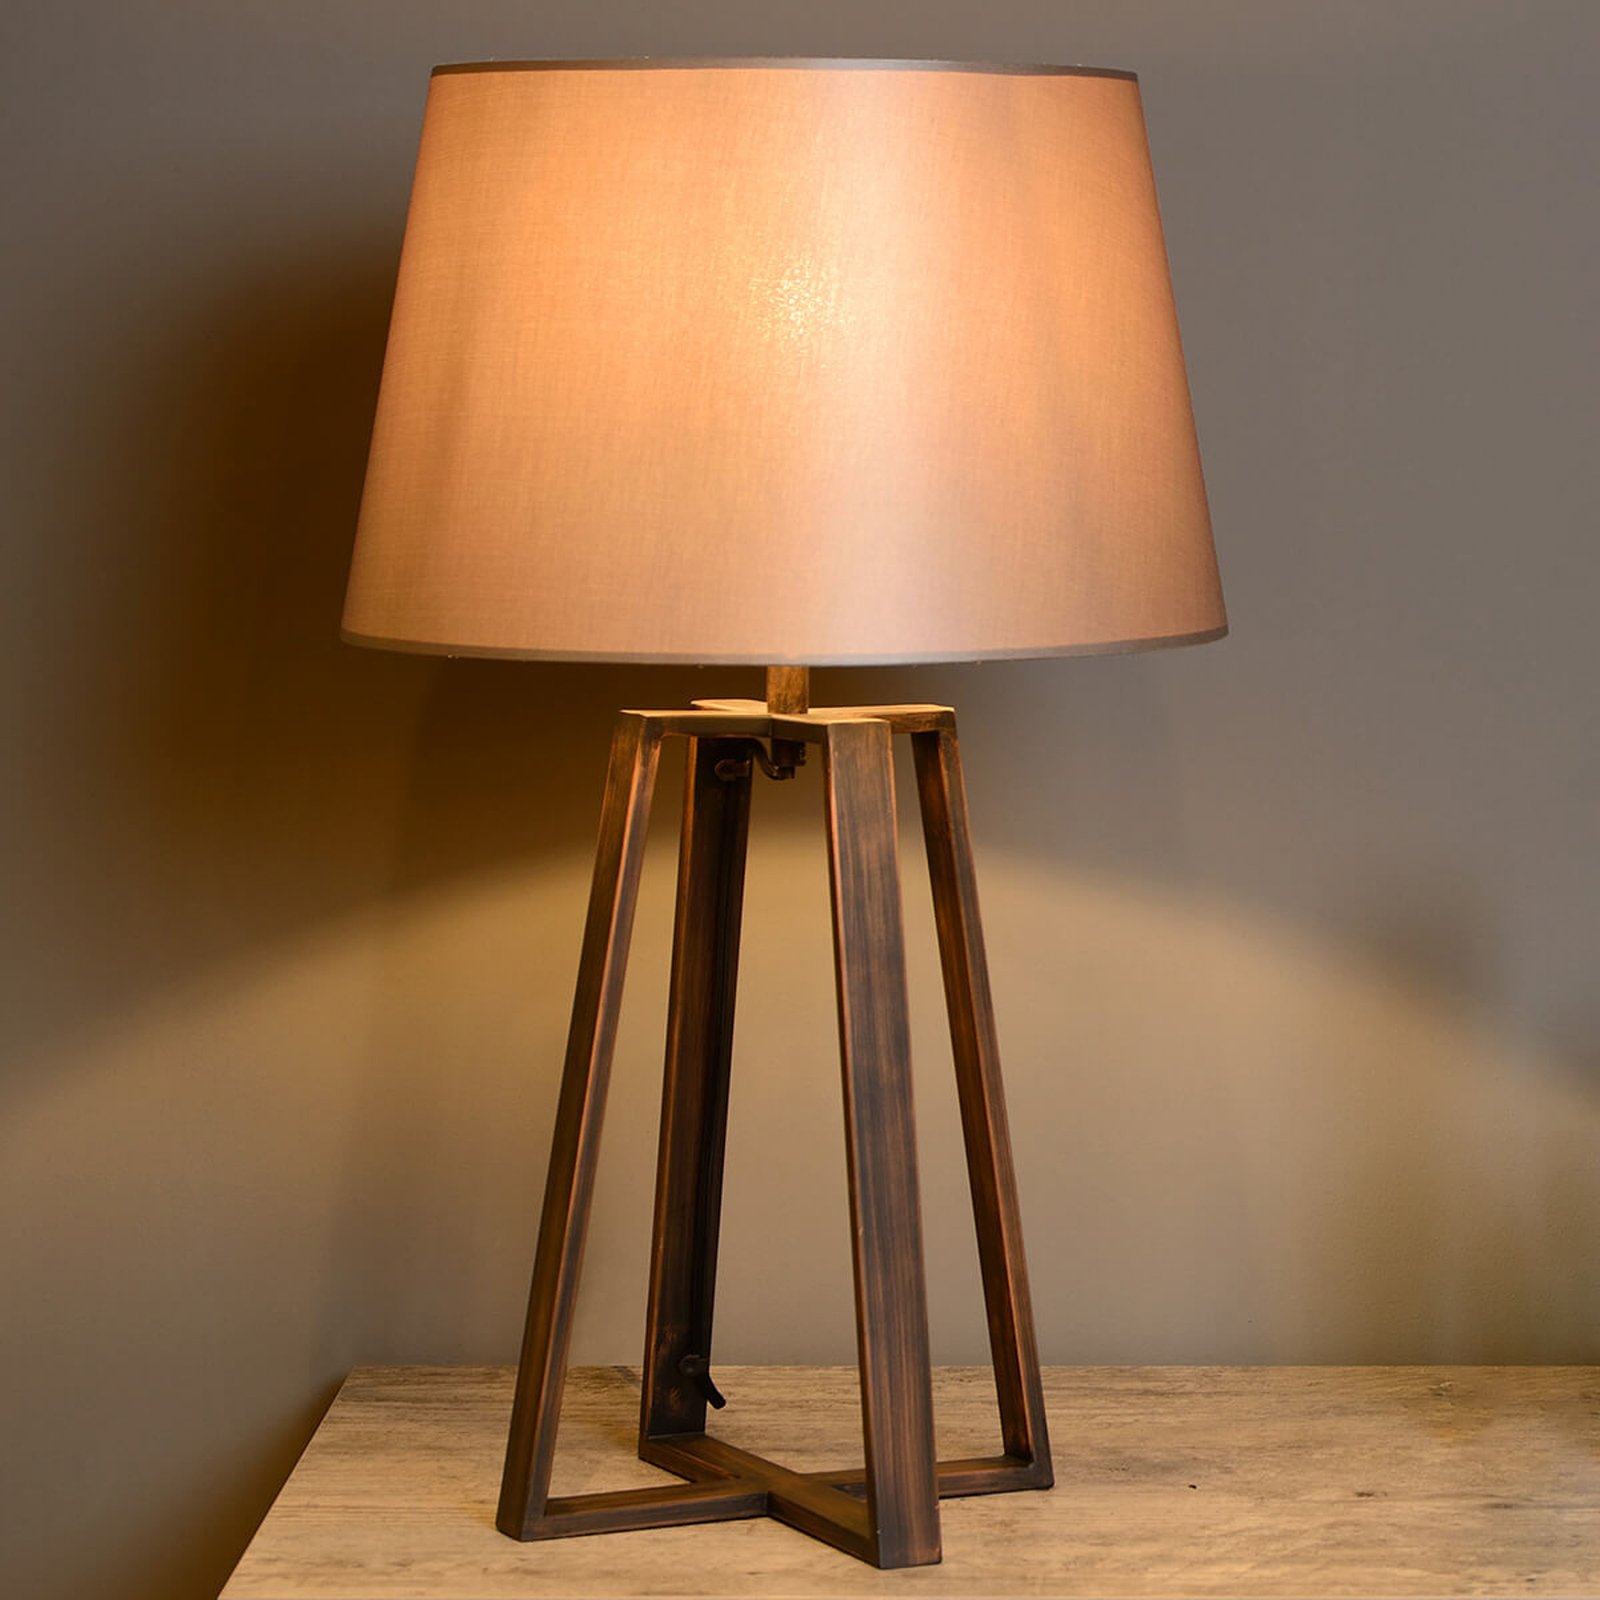 Coffee Lamp bordslampa med brun tygskärm